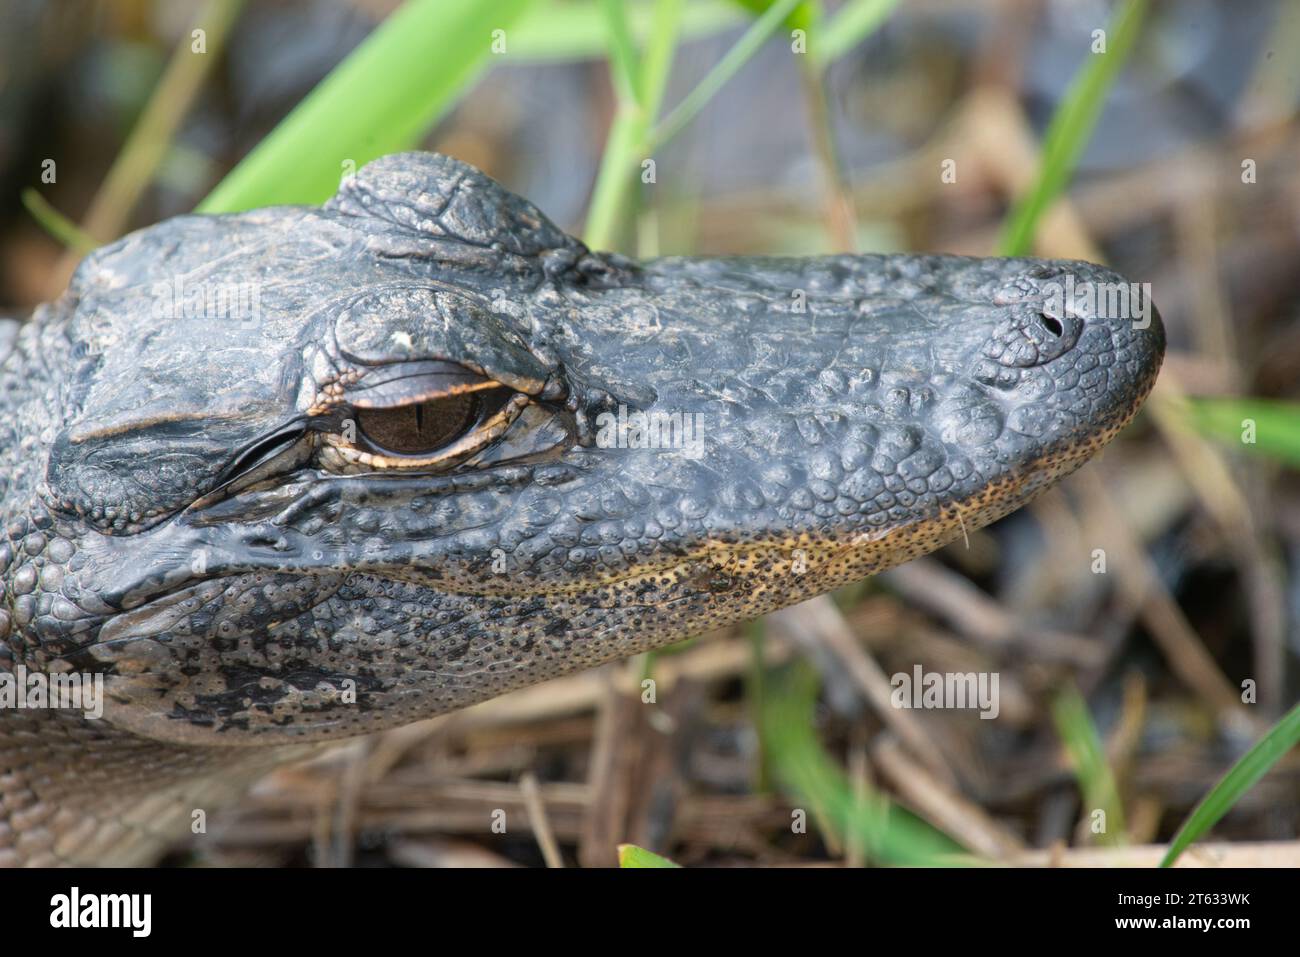 A closeup shot of an Alligator's eye. Stock Photo